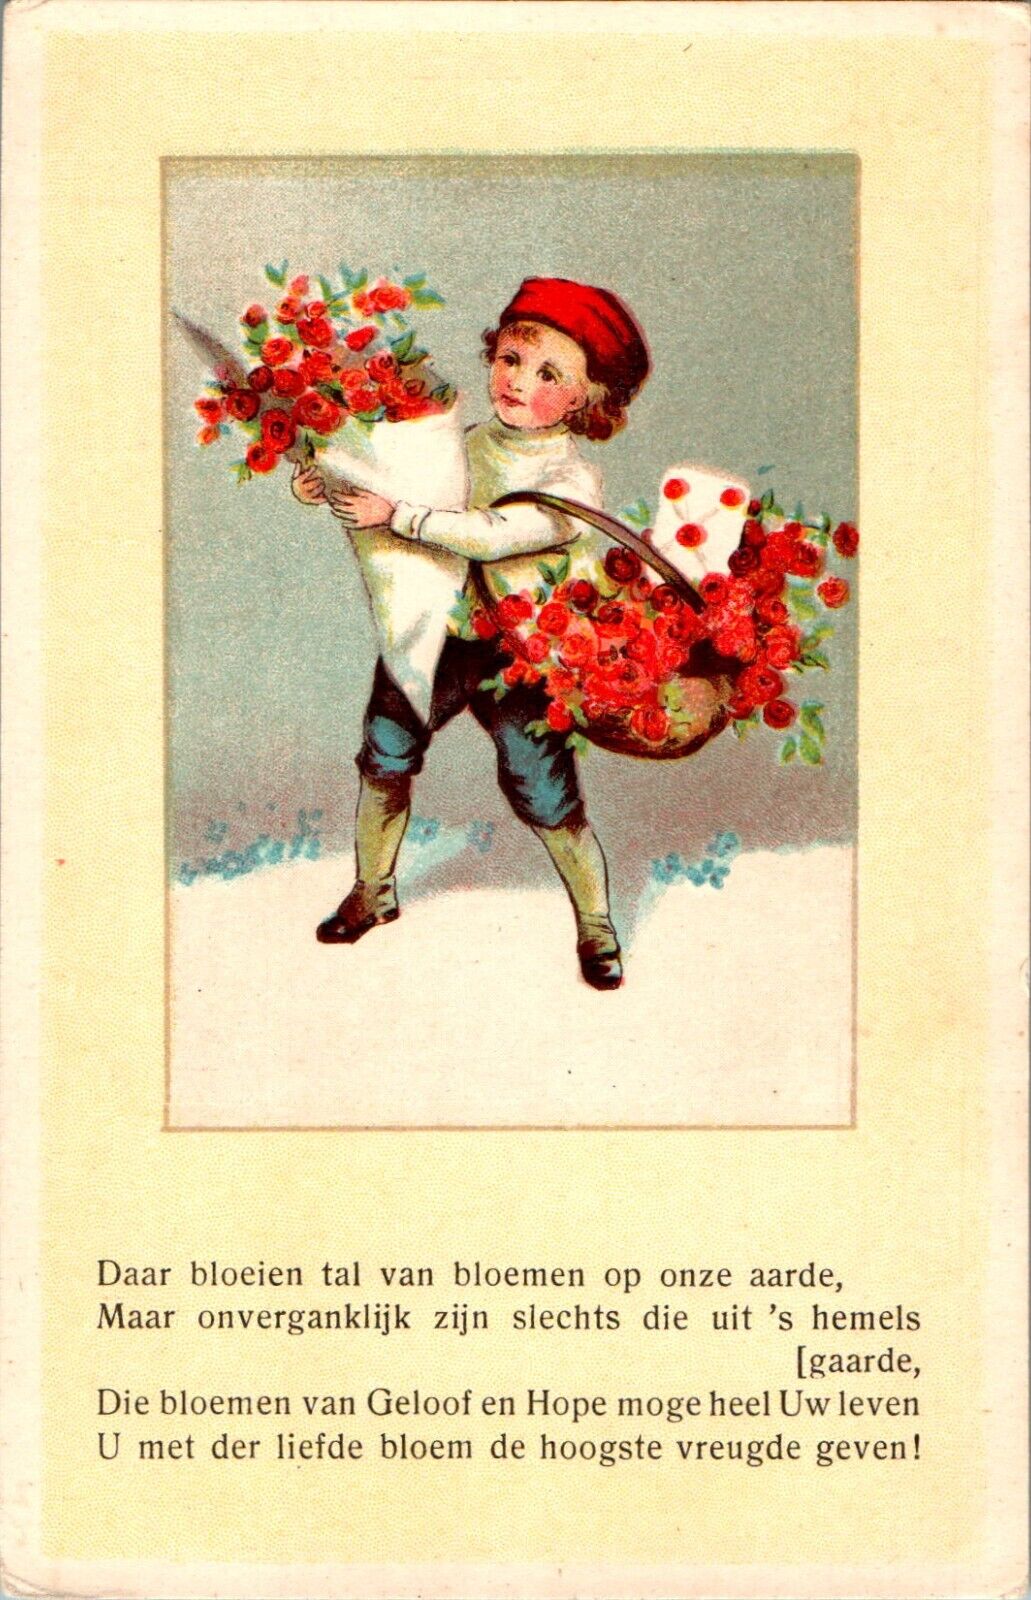 Little Boy with Flowers, Dutch Poem Postcard